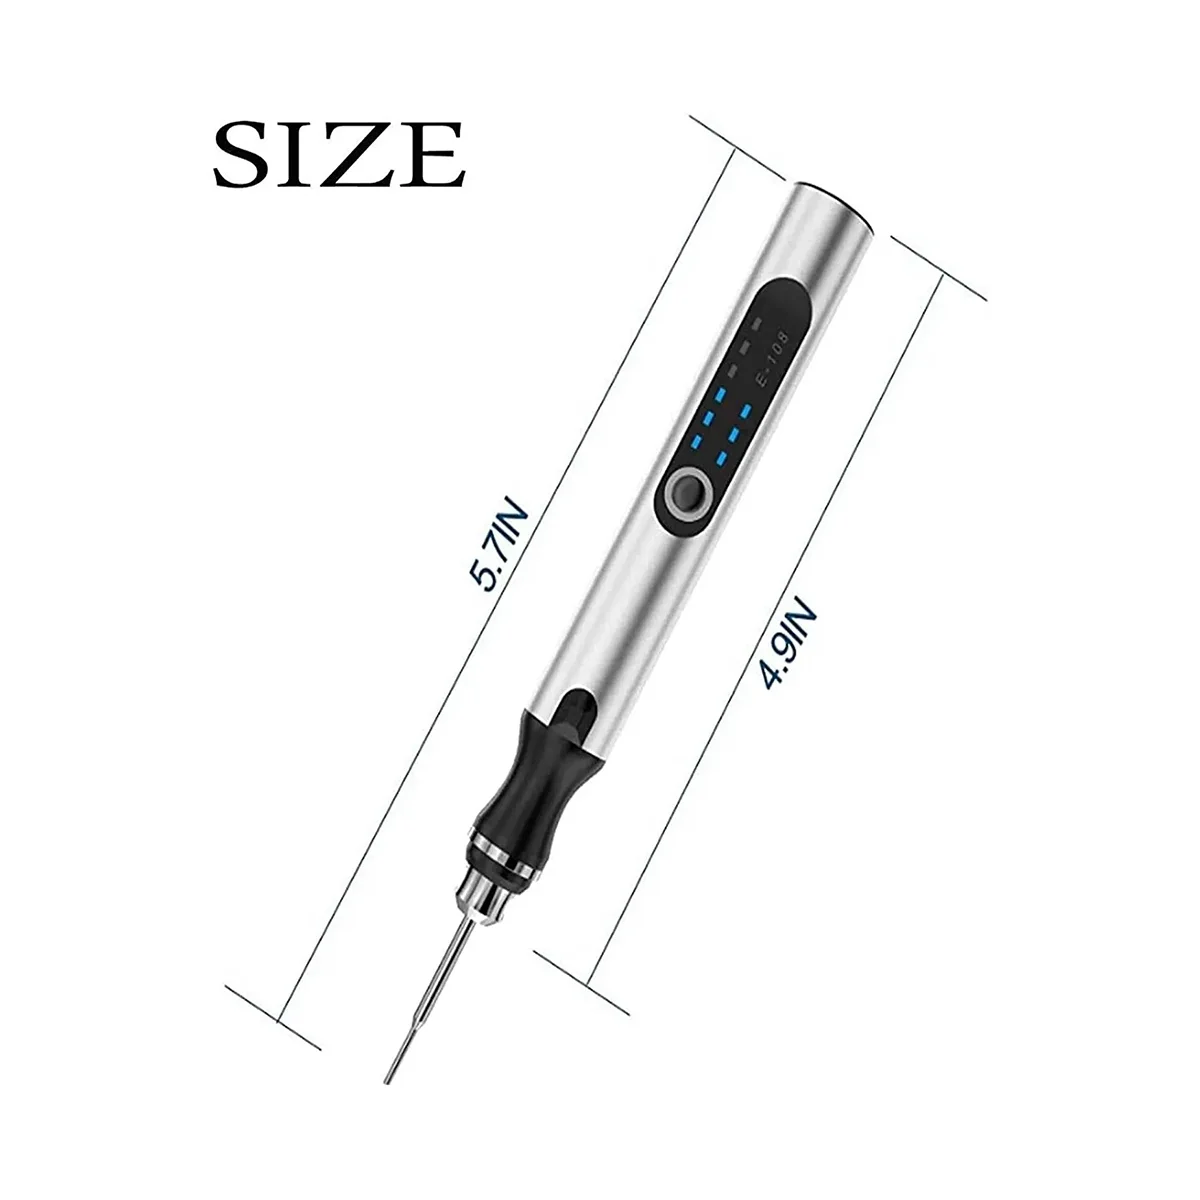 USB Customizer Professional Engraving Pen, Recarregável Cordless Engraver Tool para Metal, 30 Bits